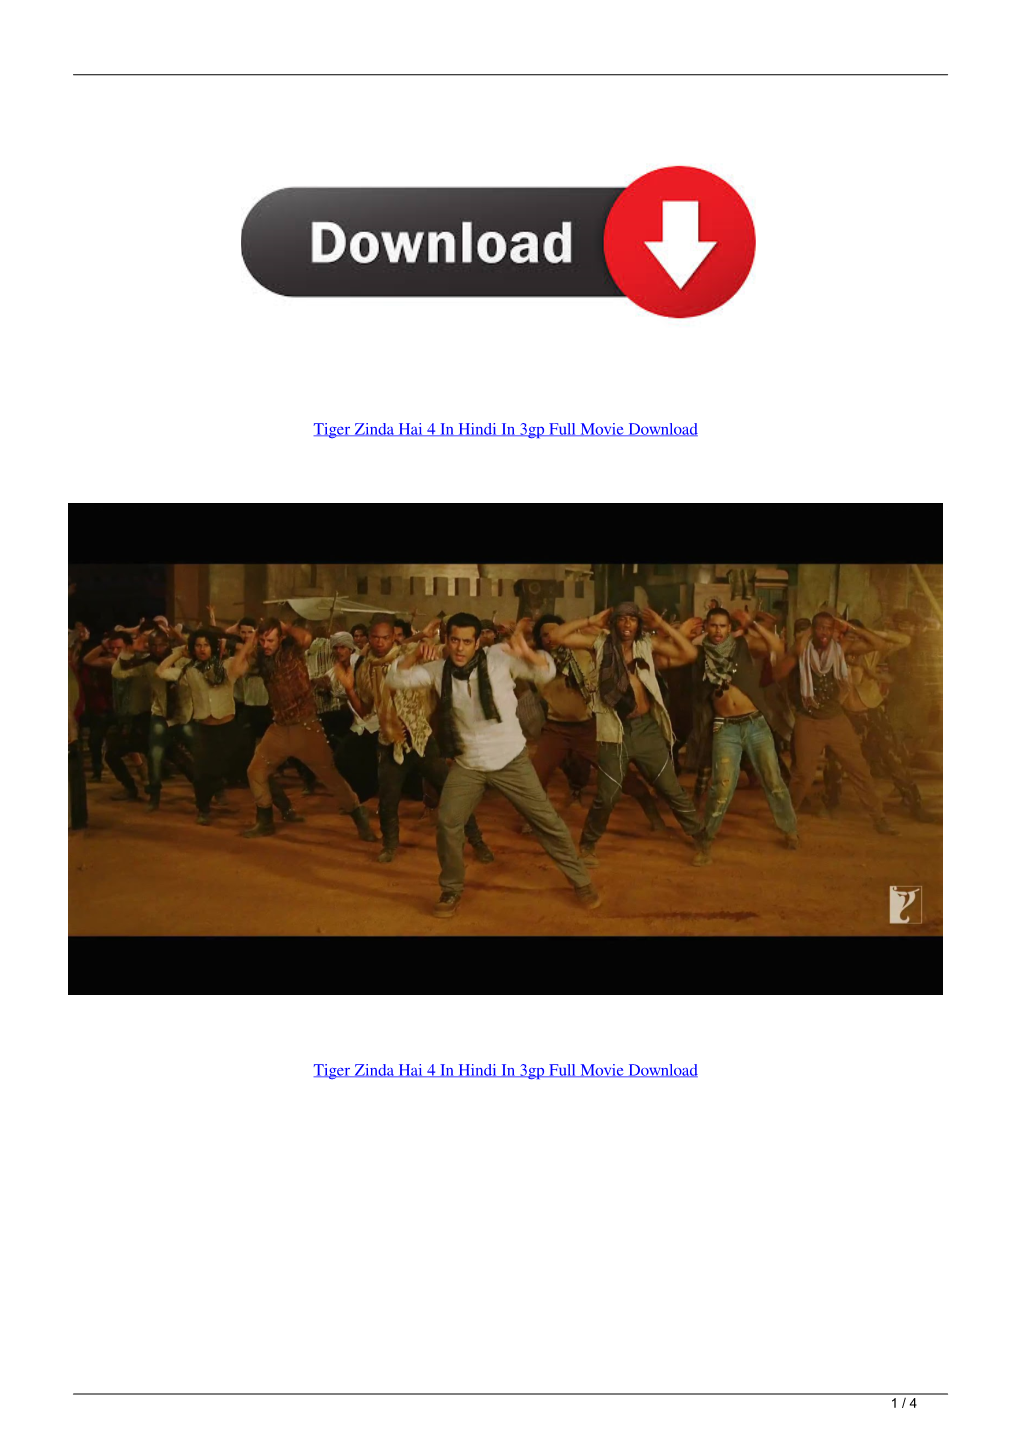 Tiger Zinda Hai 4 in Hindi in 3Gp Full Movie Download